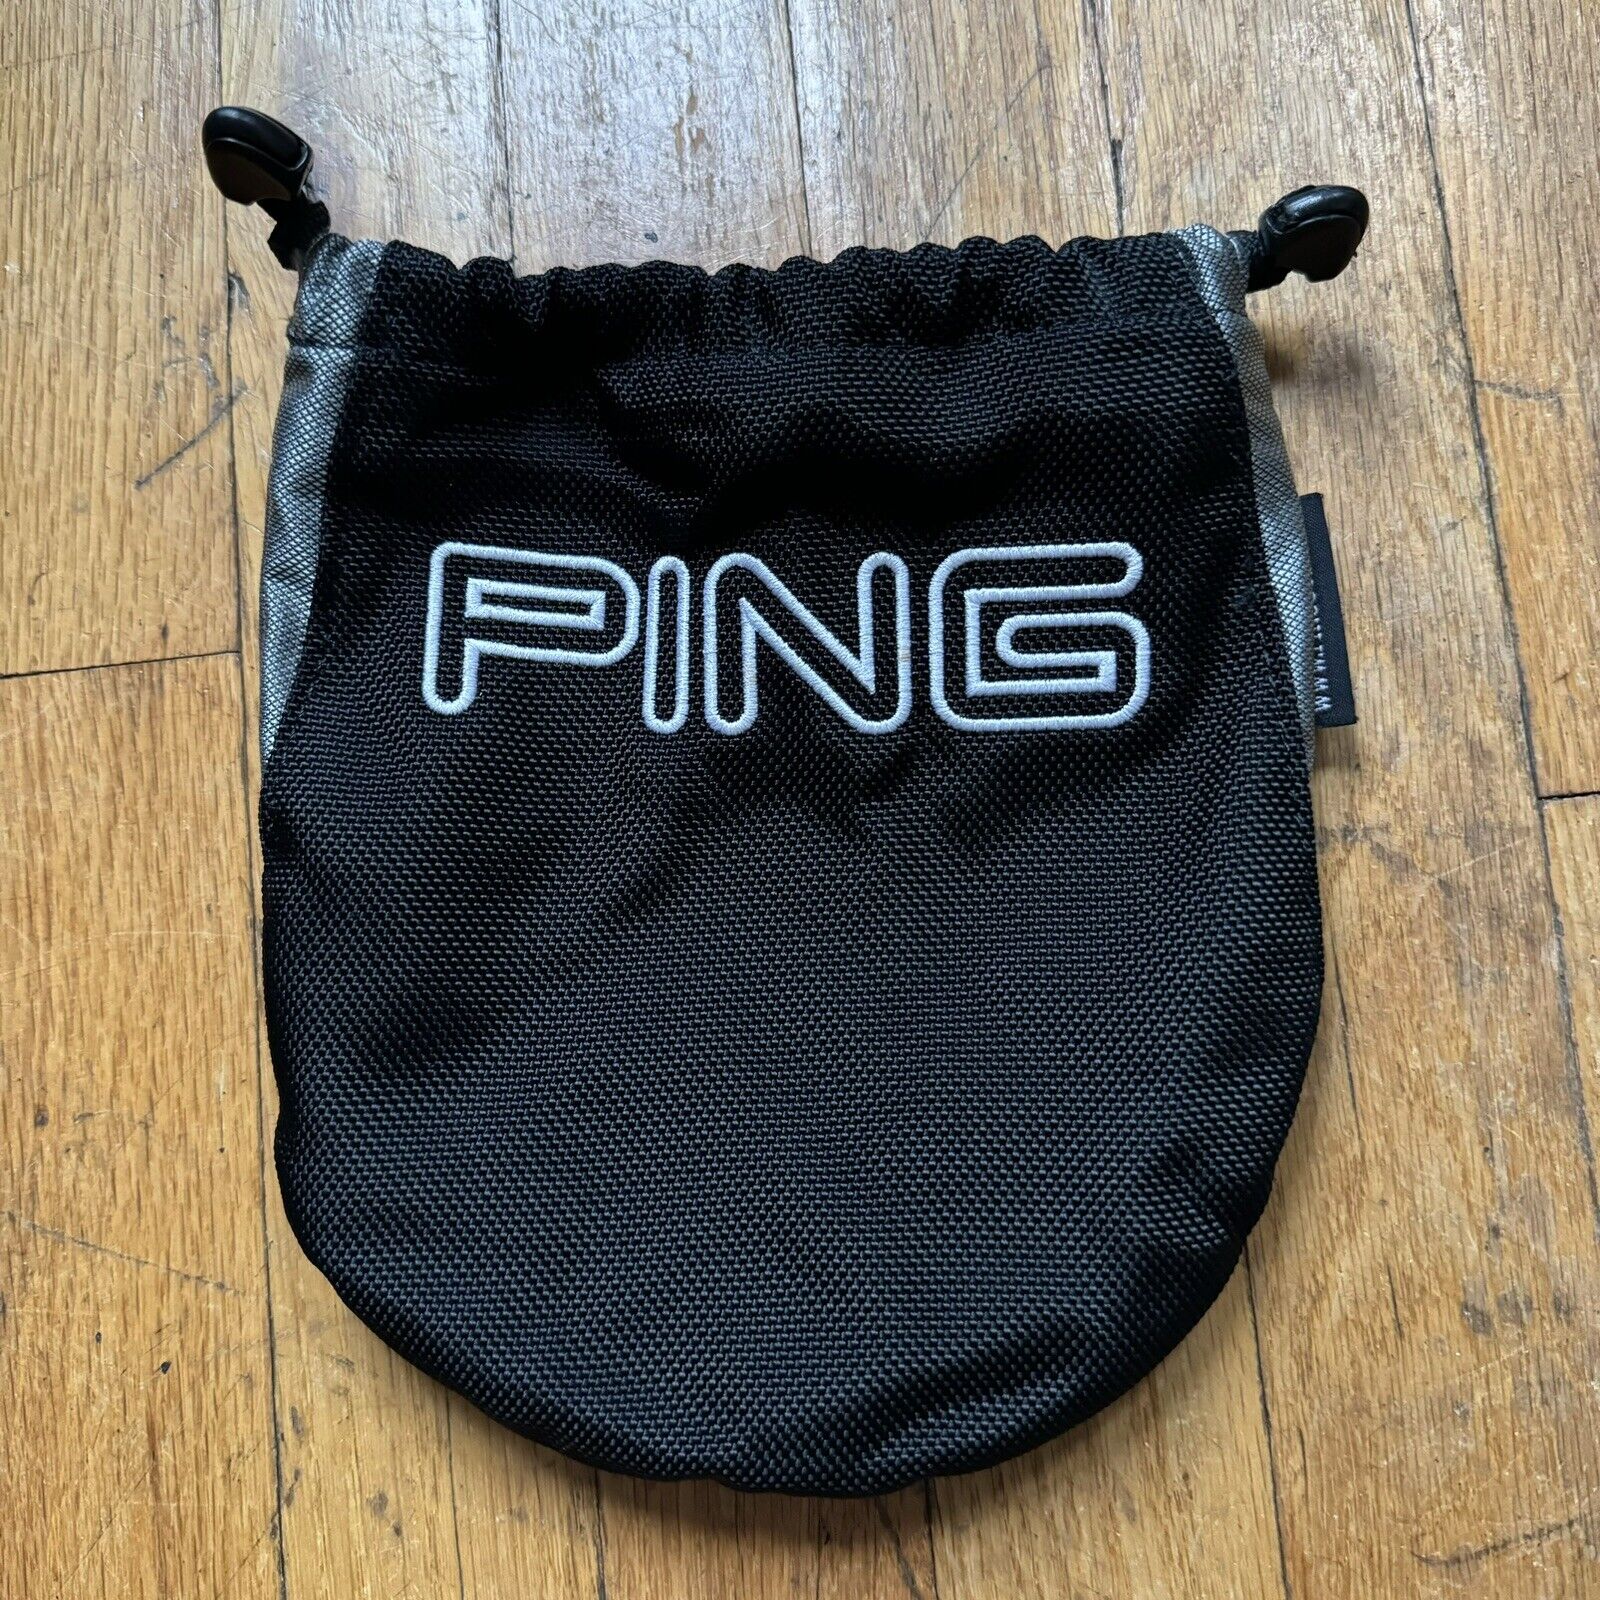 Ping Black Shag Bag Drawstring Fleece Lined Accessories Tote Golf Balls Sports